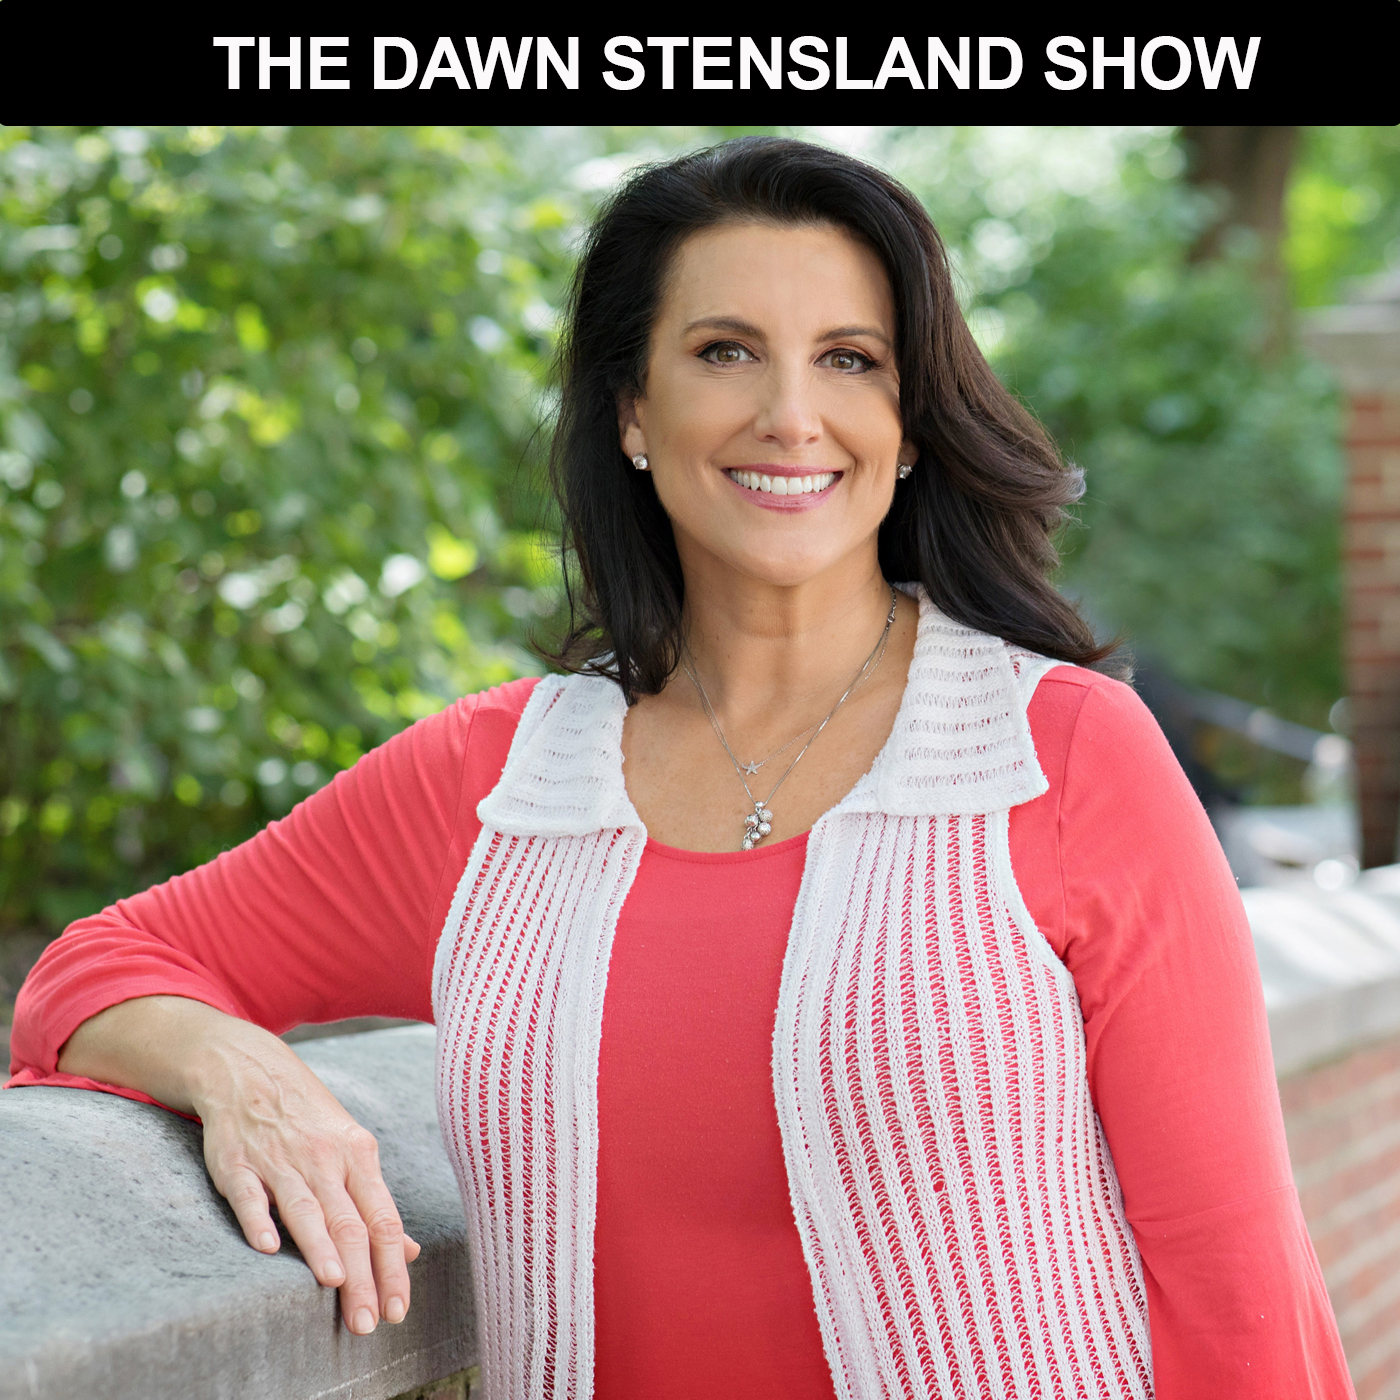 The Dawn Stensland Show